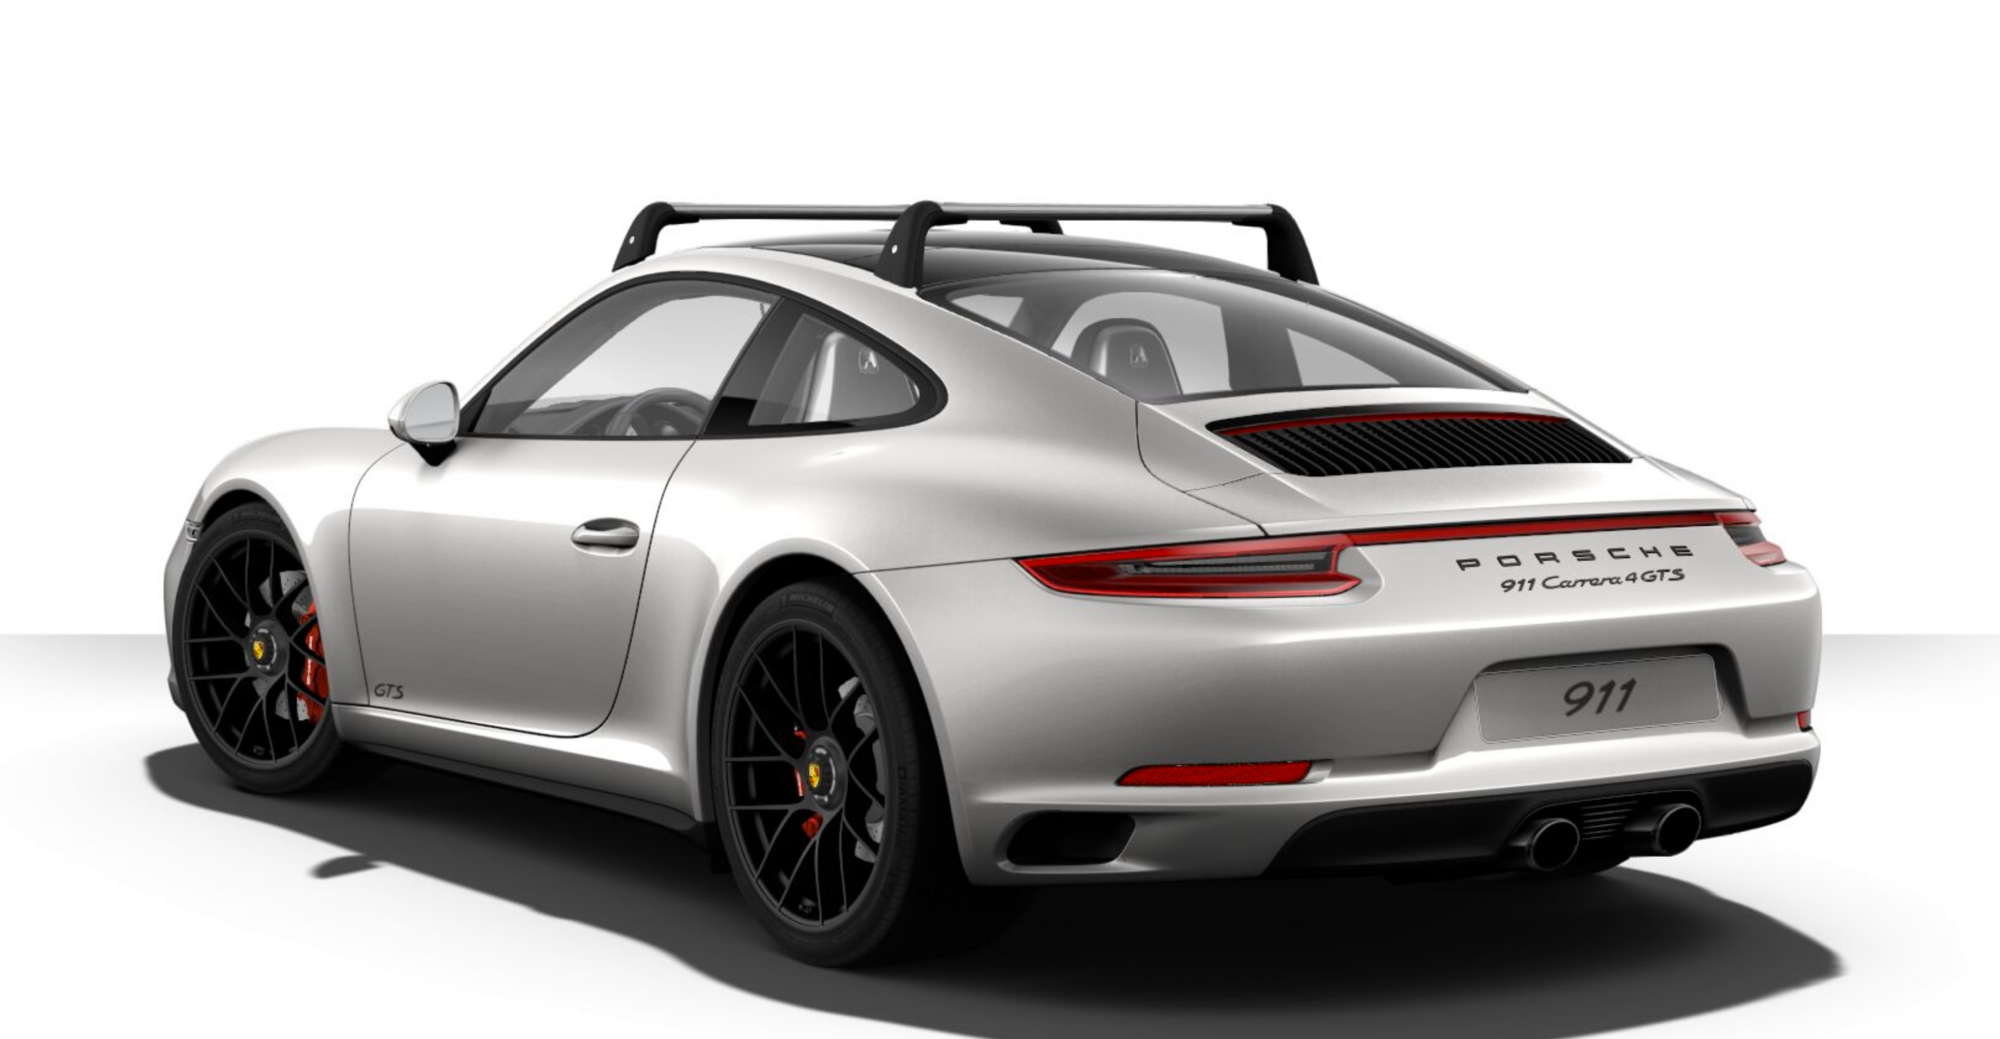 991.2 GTS picture thread - Page 17 - Rennlist - Porsche Discussion Forums